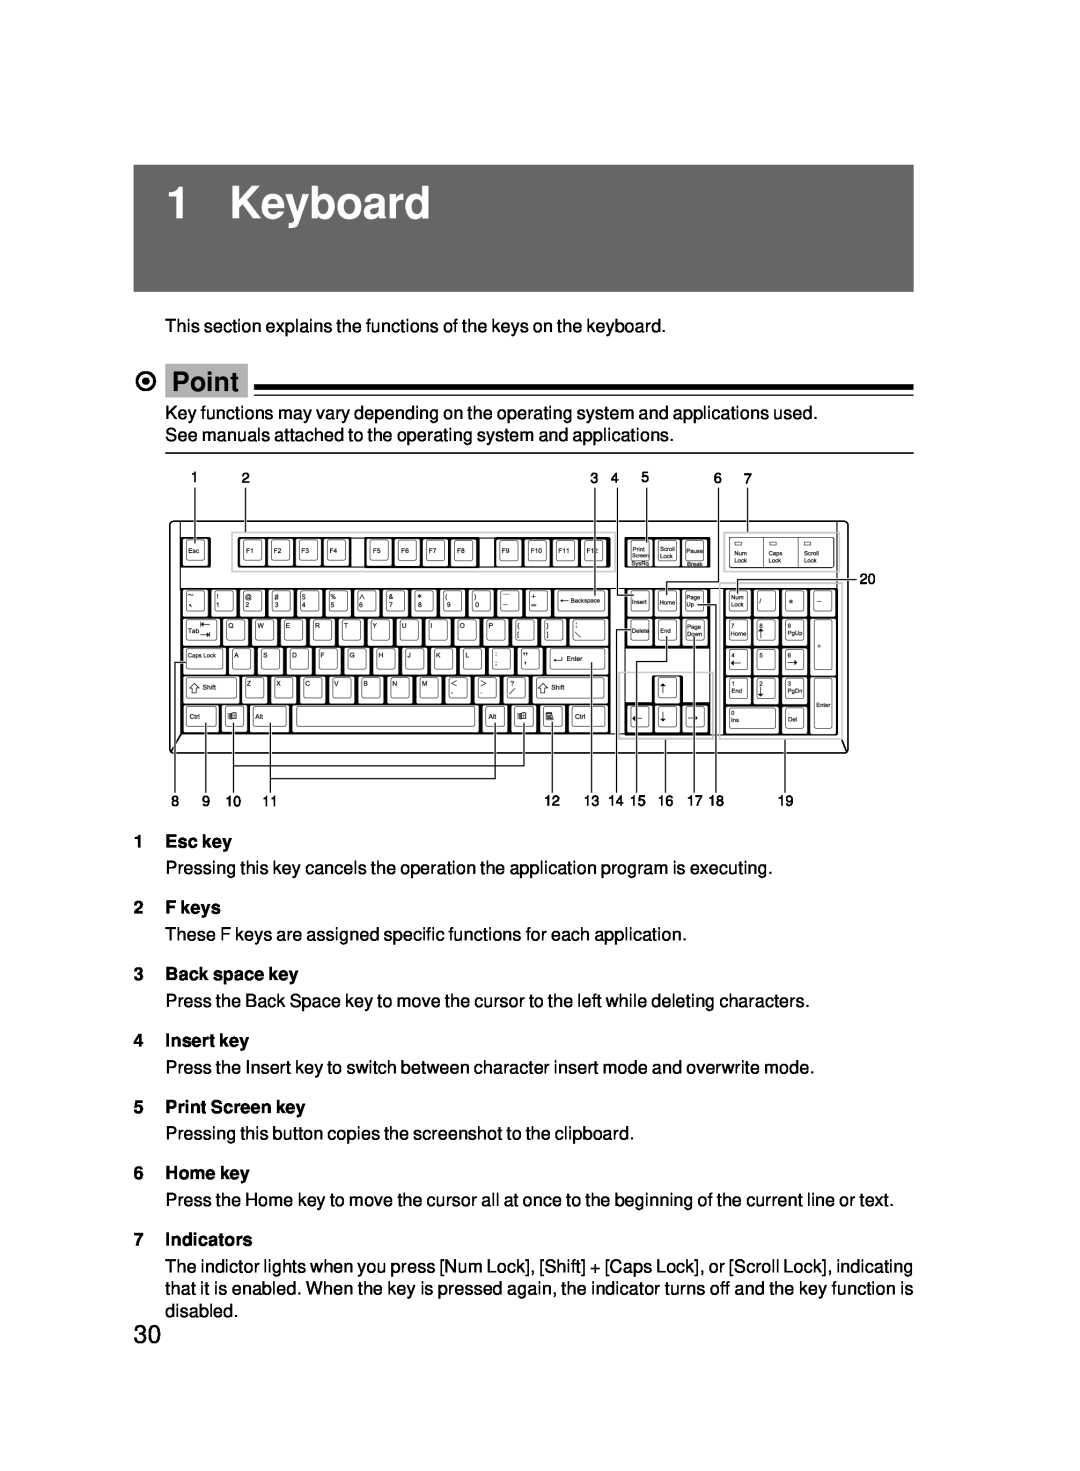 Fujitsu 5000 Keyboard, Point, Esc key, F keys, Back space key, Insert key, Print Screen key, Home key, Indicators 